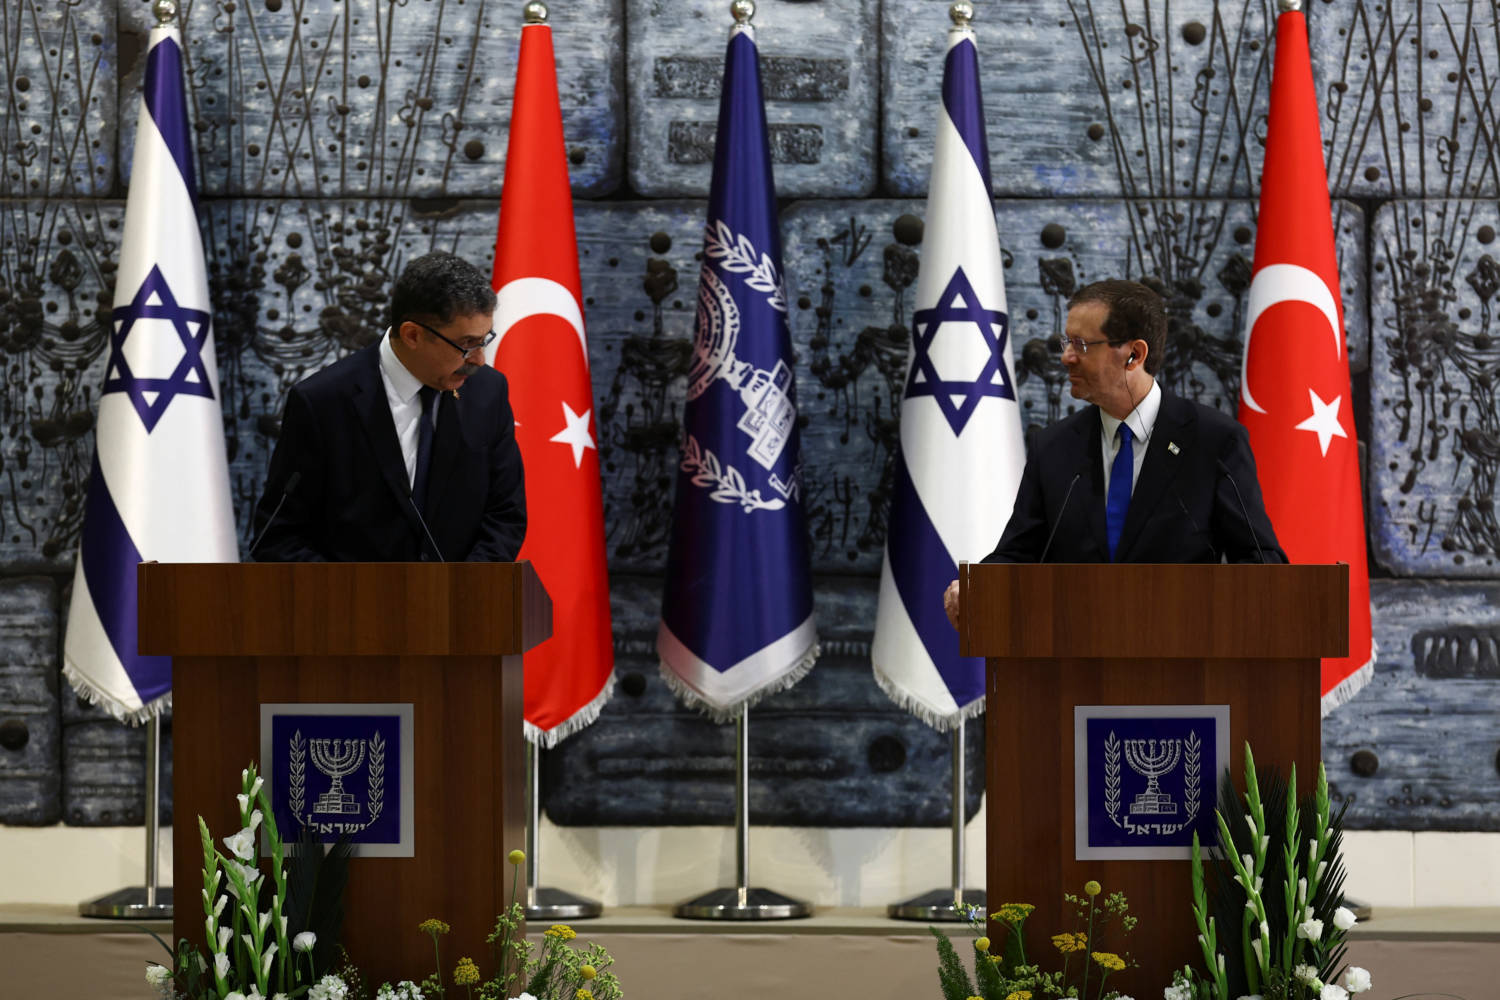 Turkey's New Ambassador Torunlar Presents His Diplomatic Credentials To Israel's President Herzog At The President's Residence, In Jerusalem